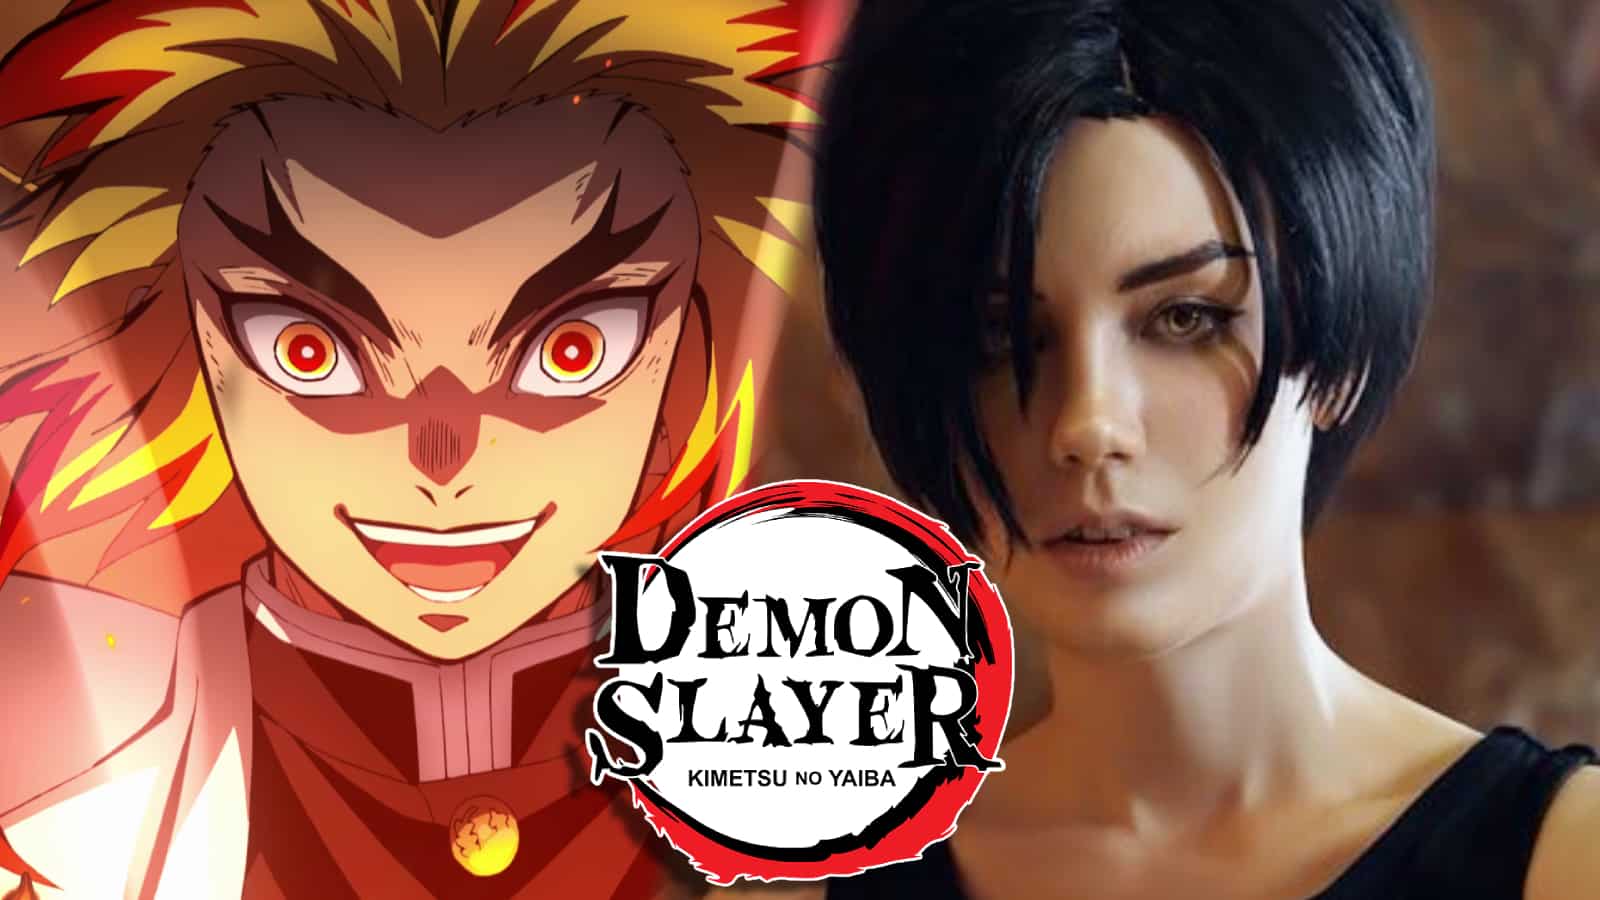 Kyojuro Rengoku from Demon Slayer anime next to cosplayer